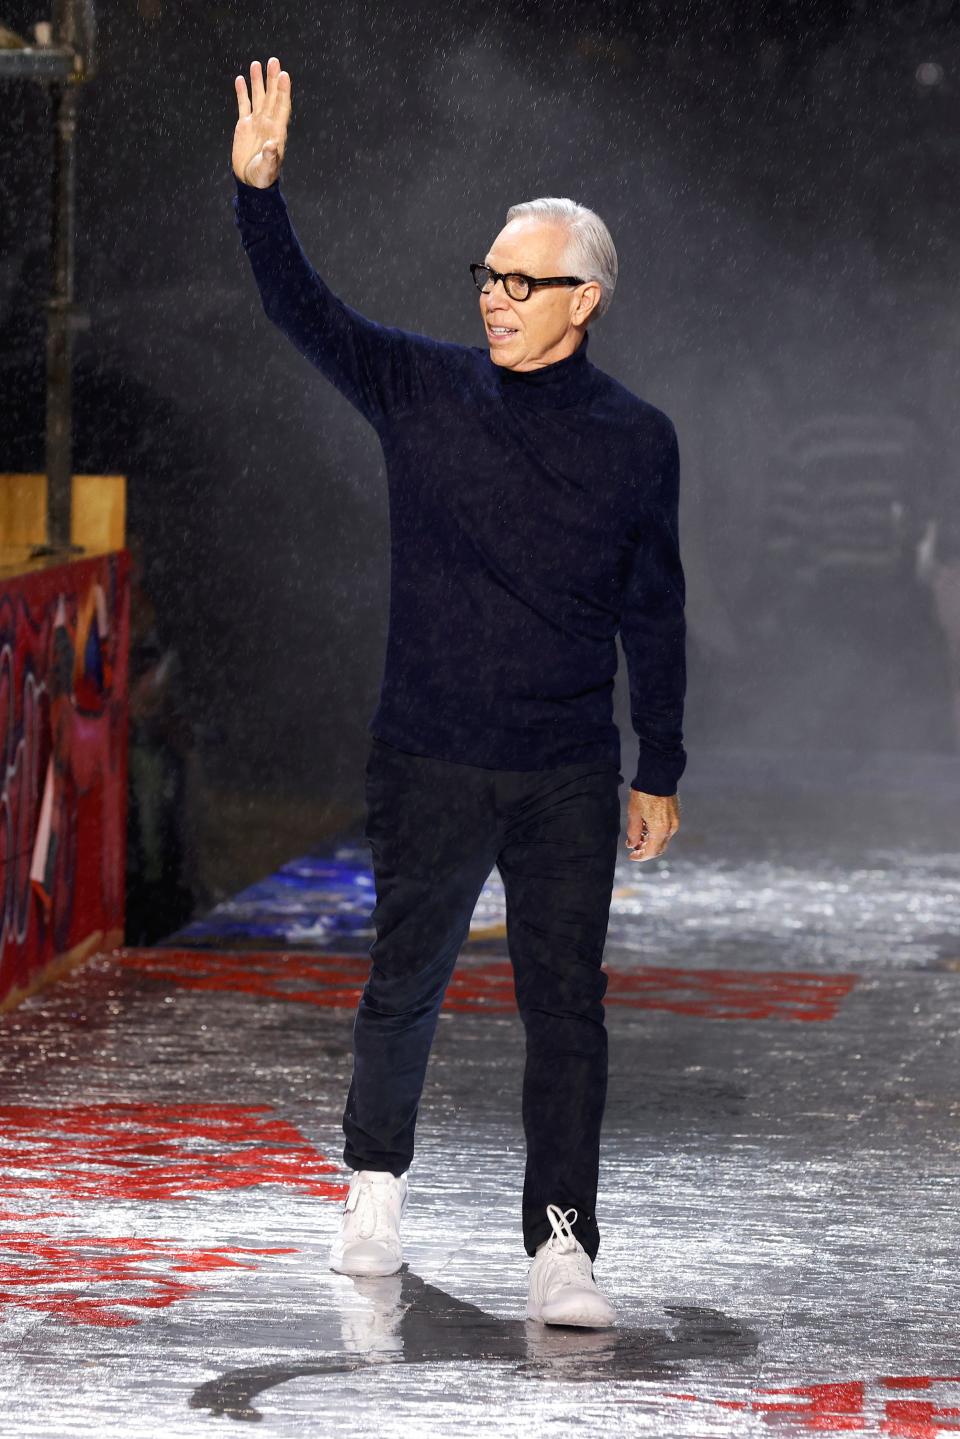 Tommy Hilfiger walked the runway following his New York Fashion Week return.